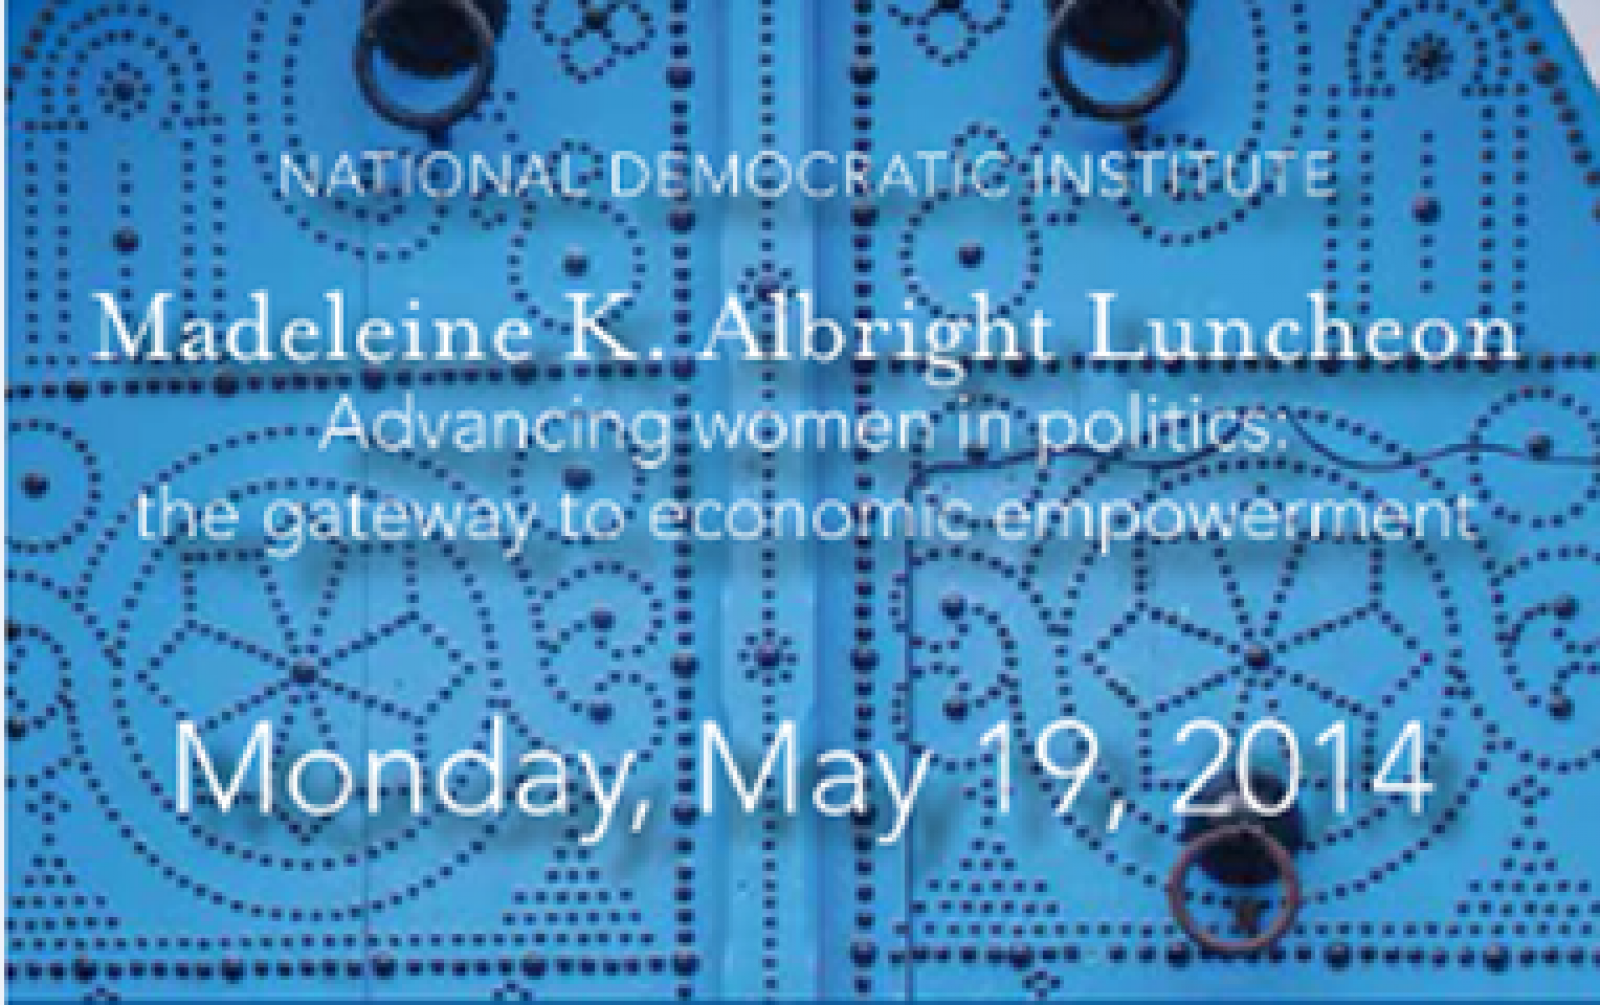 IMF Director Christine Lagarde to Keynote NDI's Madeleine K. Albright Award Luncheon